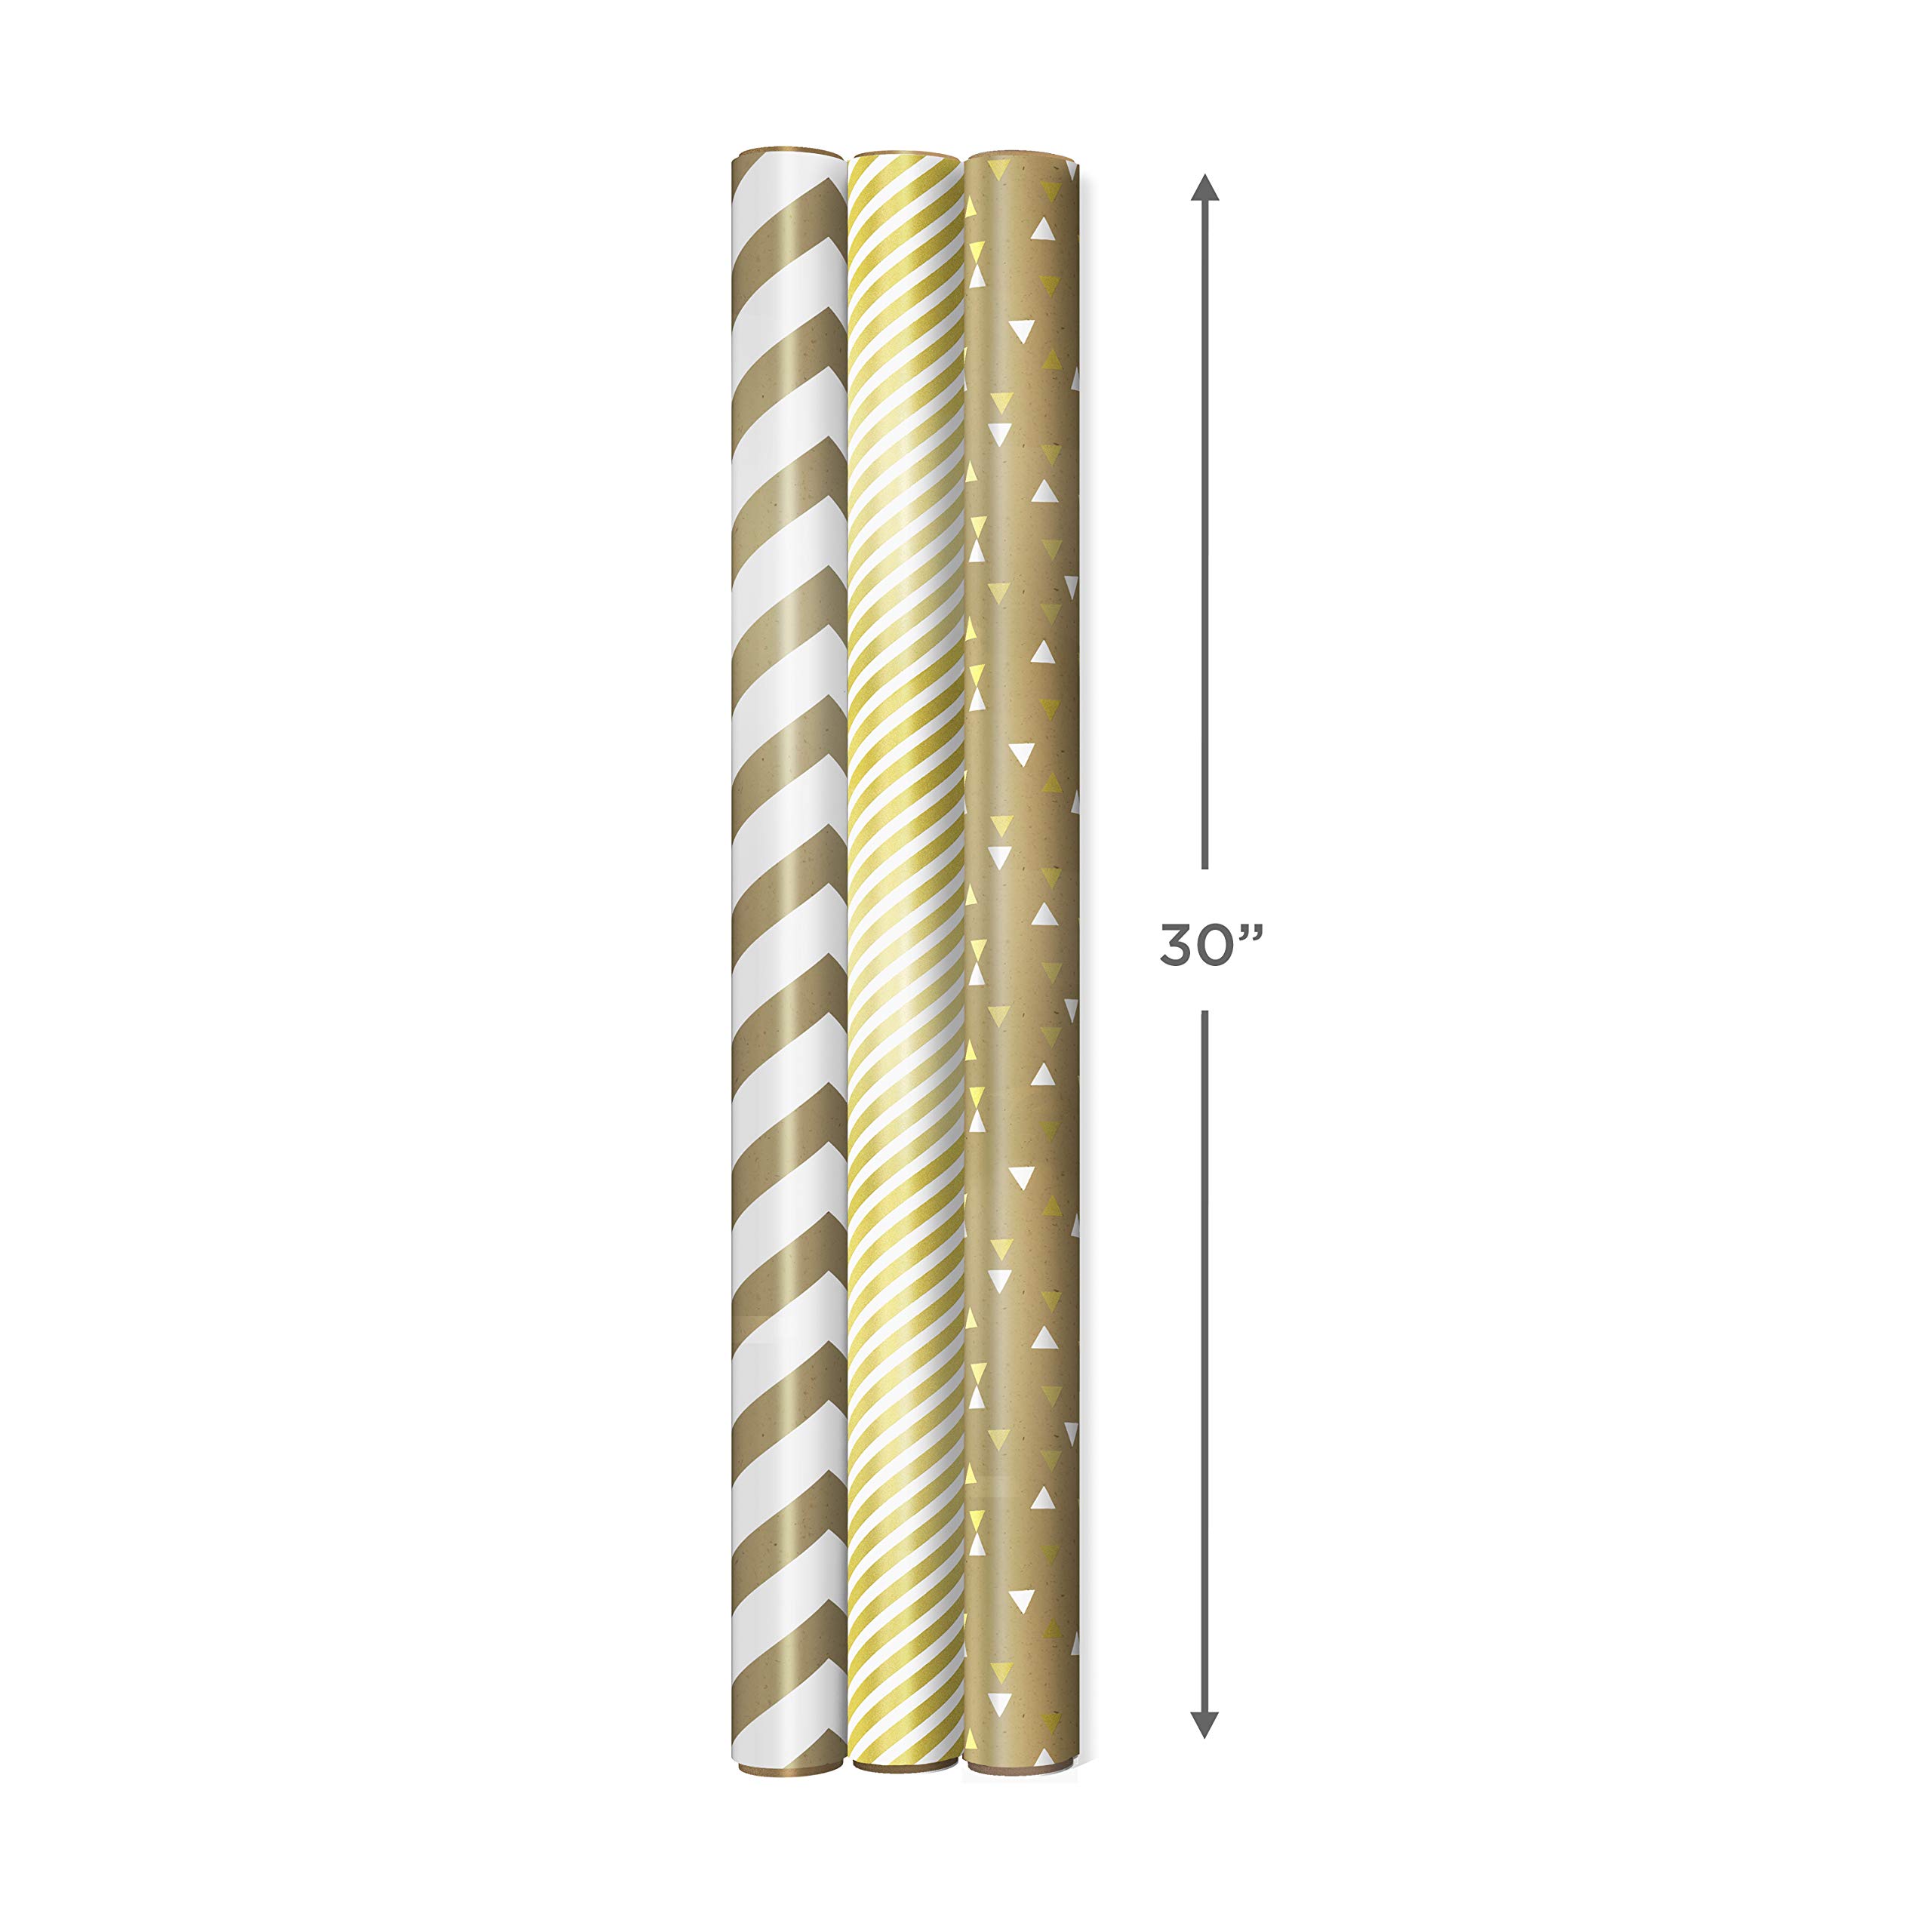 Hallmark All Occasion Reversible Wrapping Paper - Gold & Kraft Stripes, Triangles, Chevron, Polka Dots (3 Rolls: 75 sq. ft. ttl) for Birthdays, Christmas, Hanukkah, Crafts